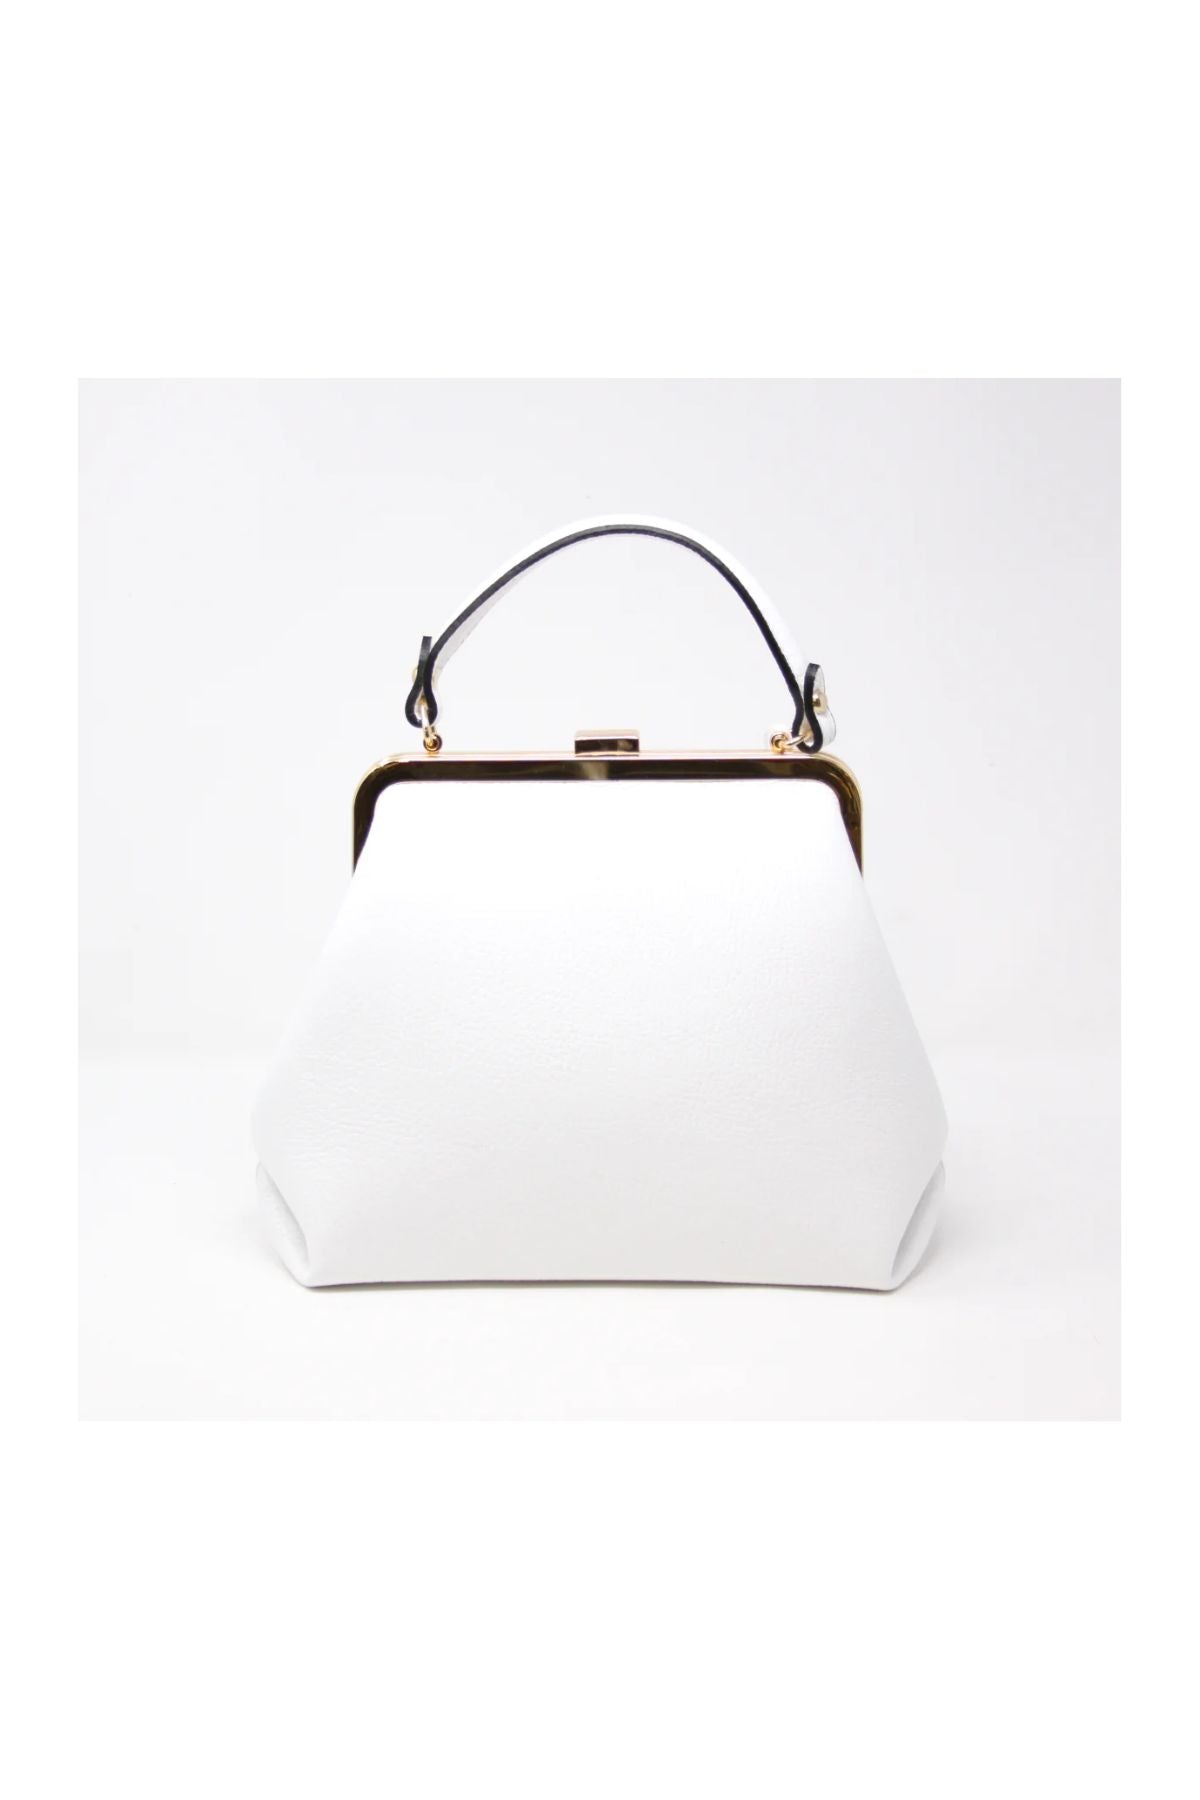 White leather handbag with top handle